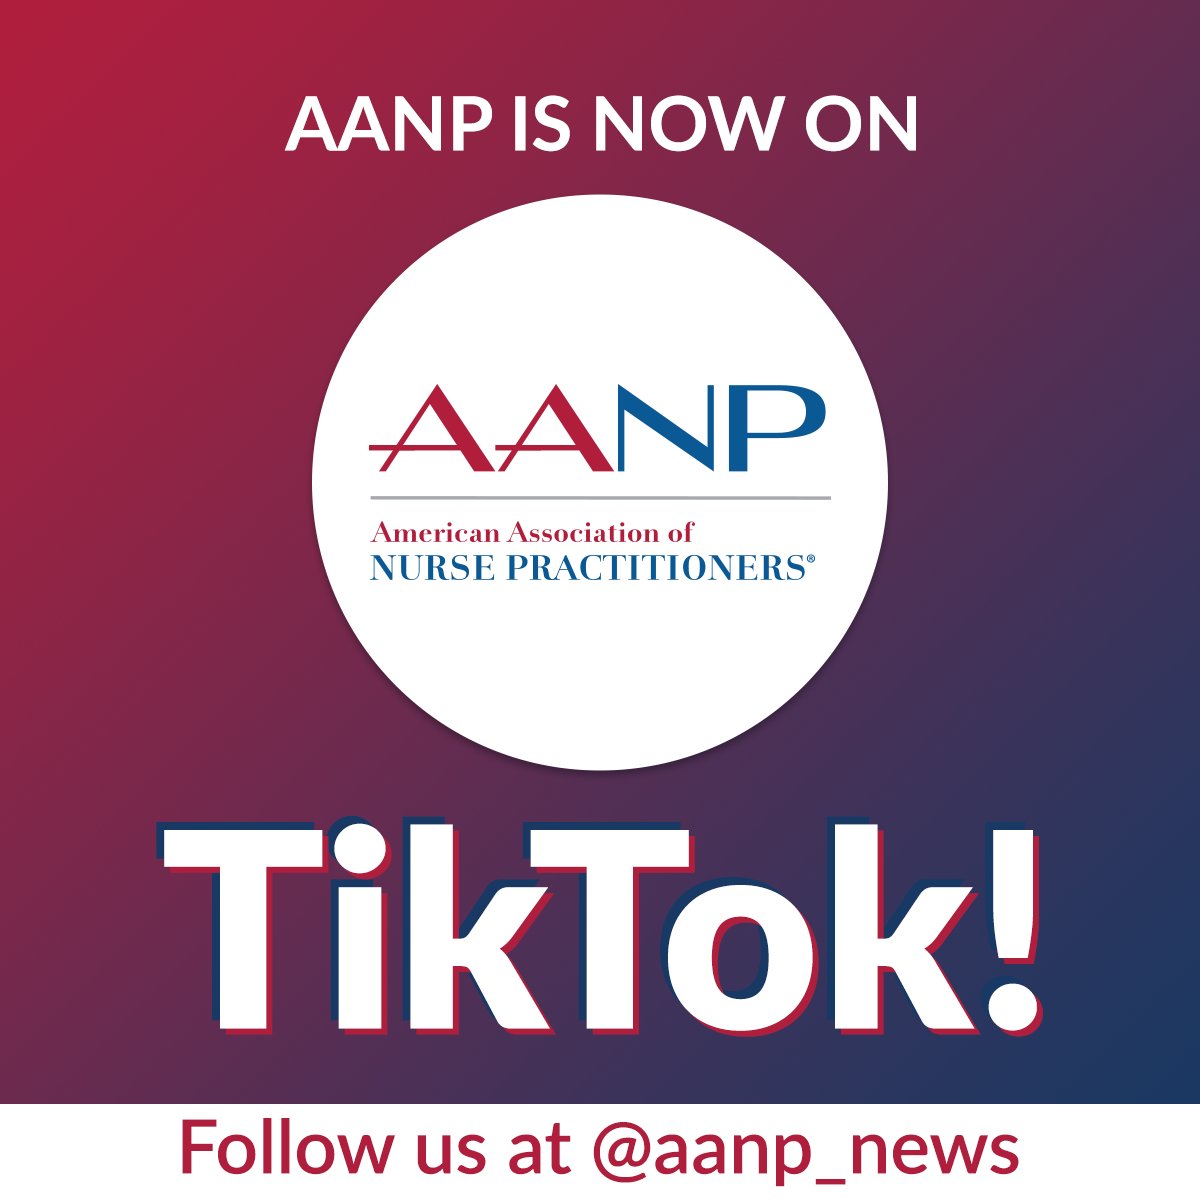 AANP is now on TikTok! Follow us at aanp_news for inspiring NP testimonies, exclusive video content and more! Watch now: bit.ly/aanp_tiktok. #NPsLead